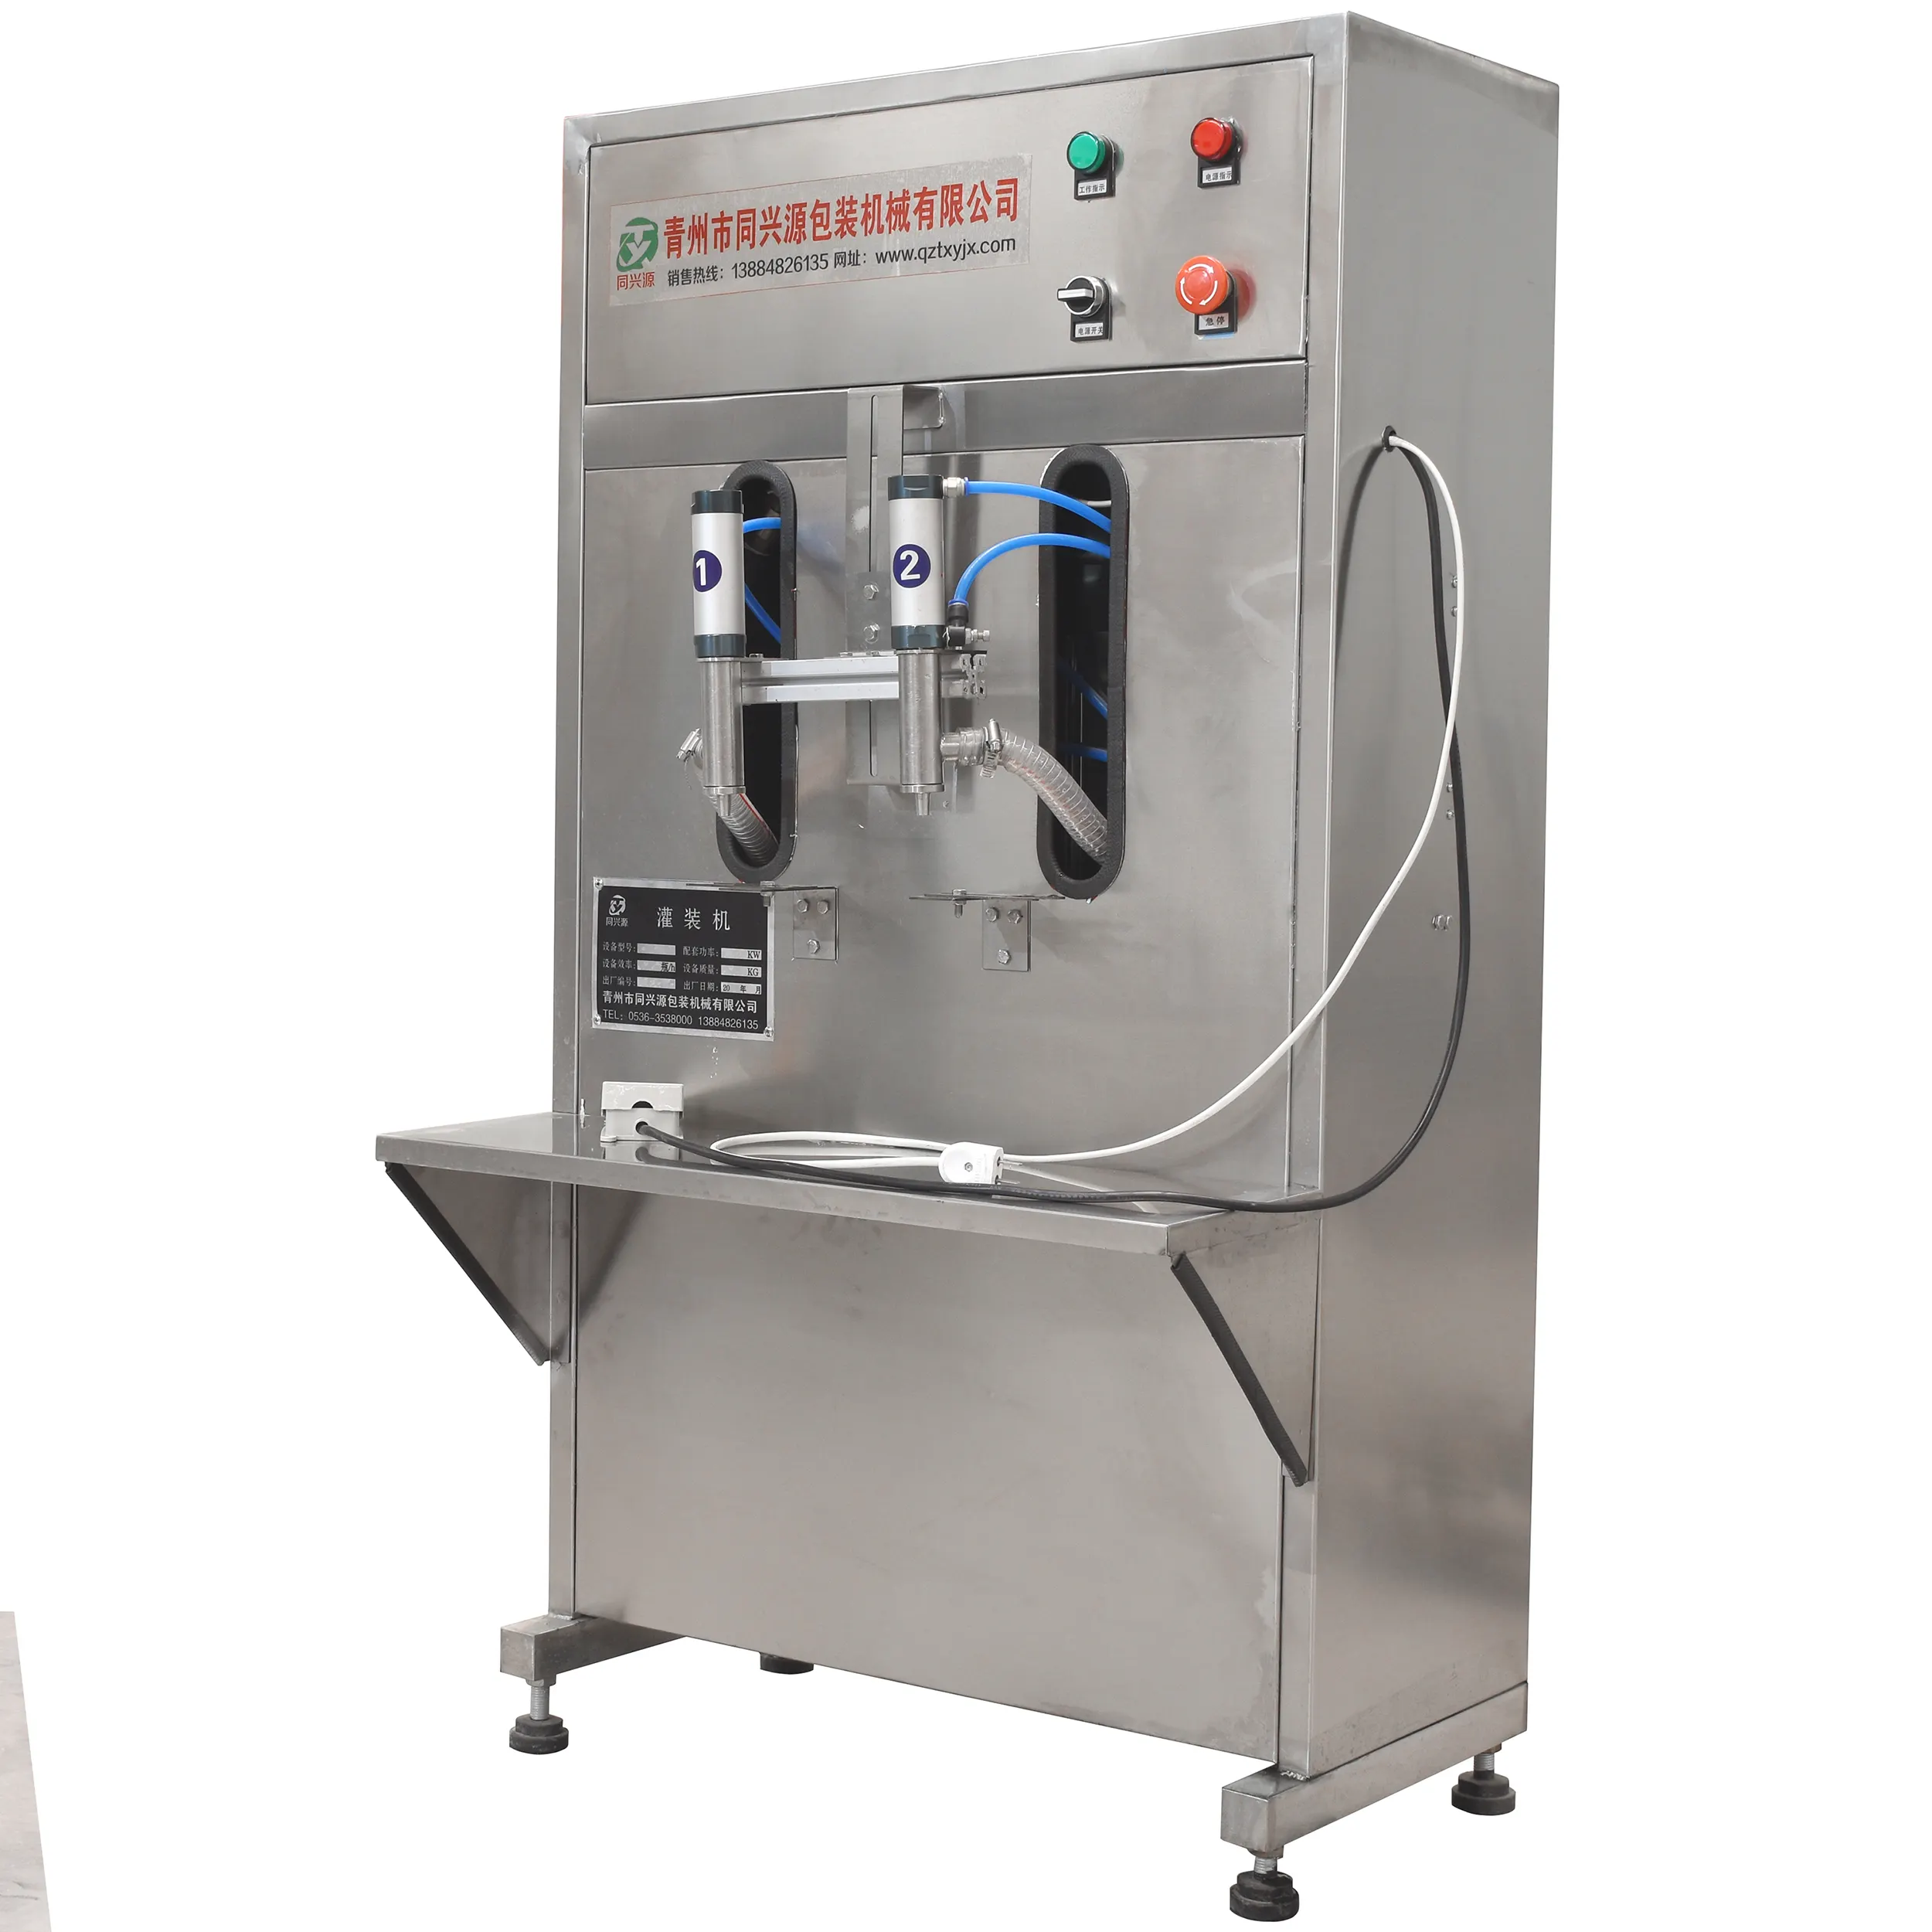 2/4 सिर क्रीम शैम्पू कॉस्मेटिक Bottler भराव पिछले तरल भरने की मशीन के लिए 200-5000 ml भरने की मशीन